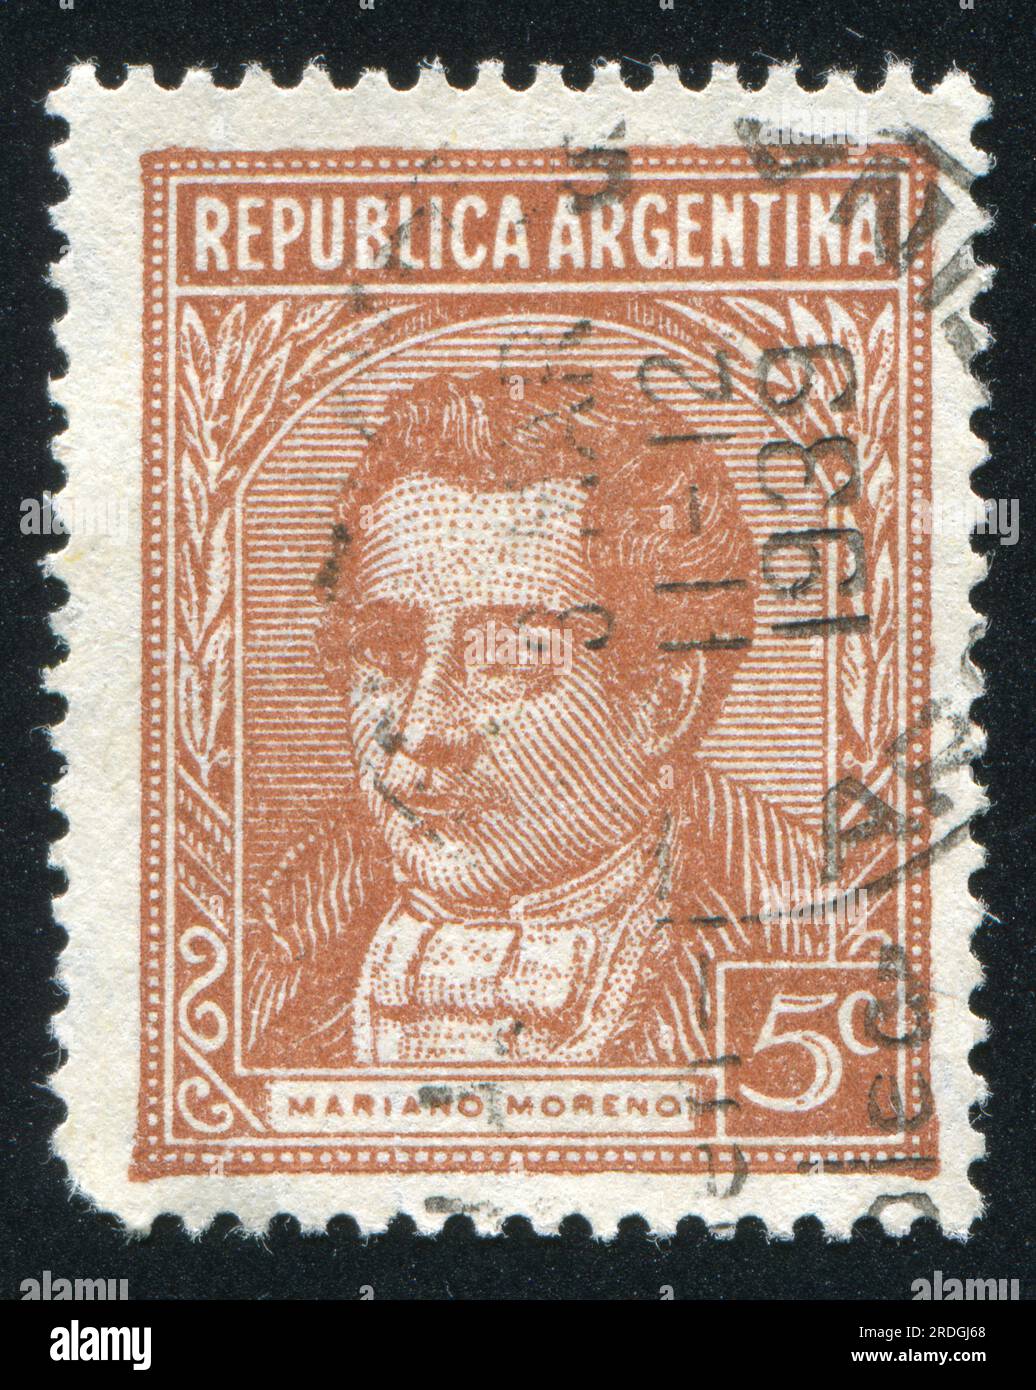 ARGENTINA - CIRCA 1935: stamp printed by Argentina, shows Mariano Moreno, circa 1935 Stock Photo